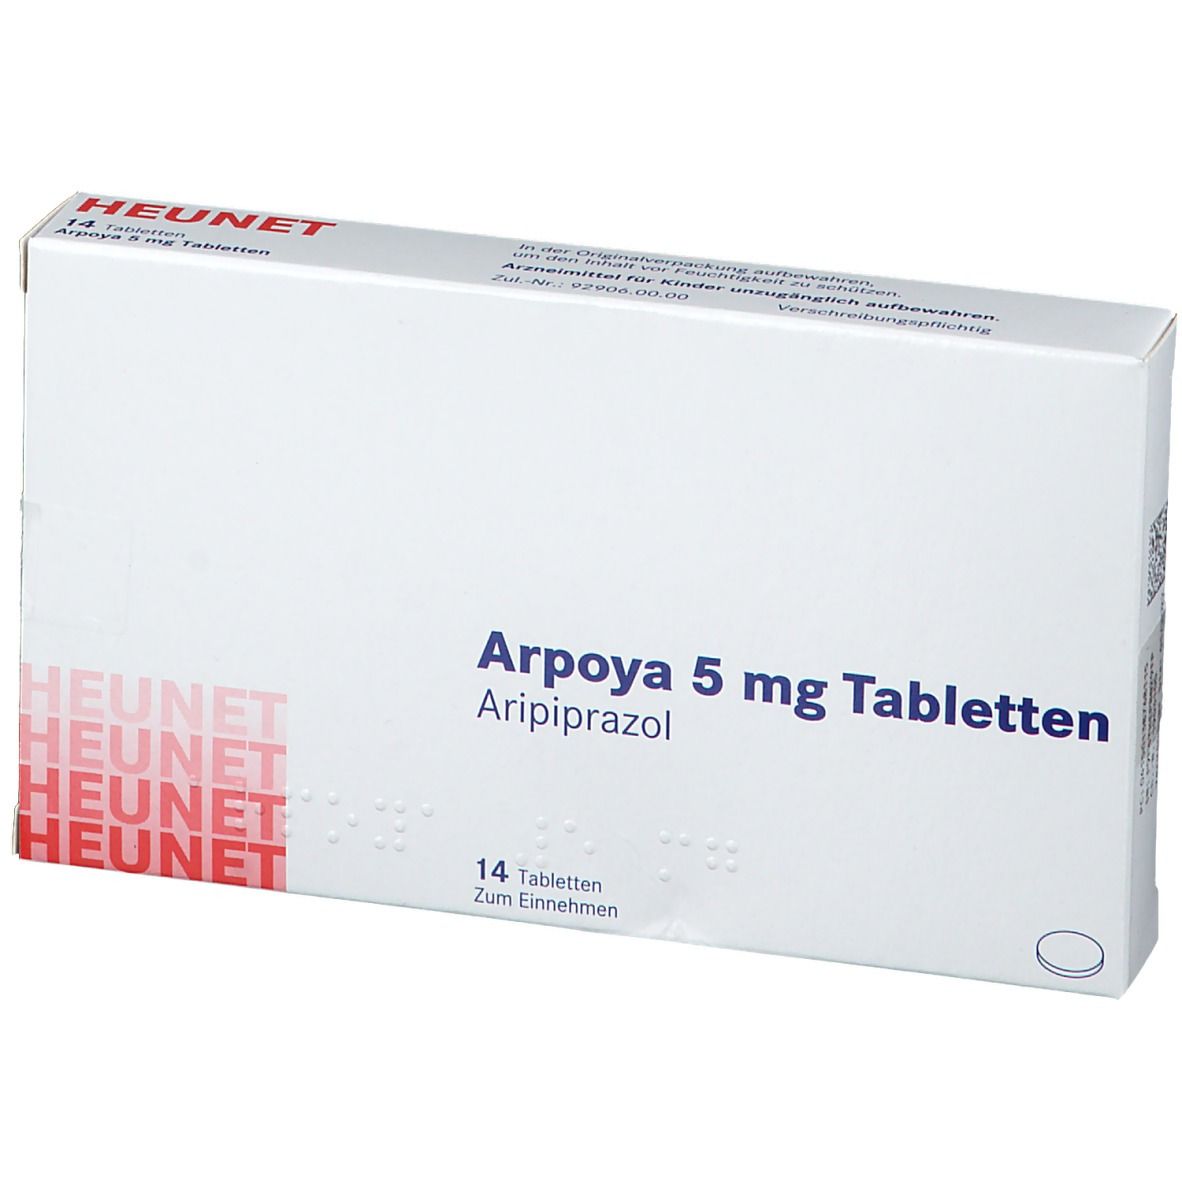 Arpoya 5 mg